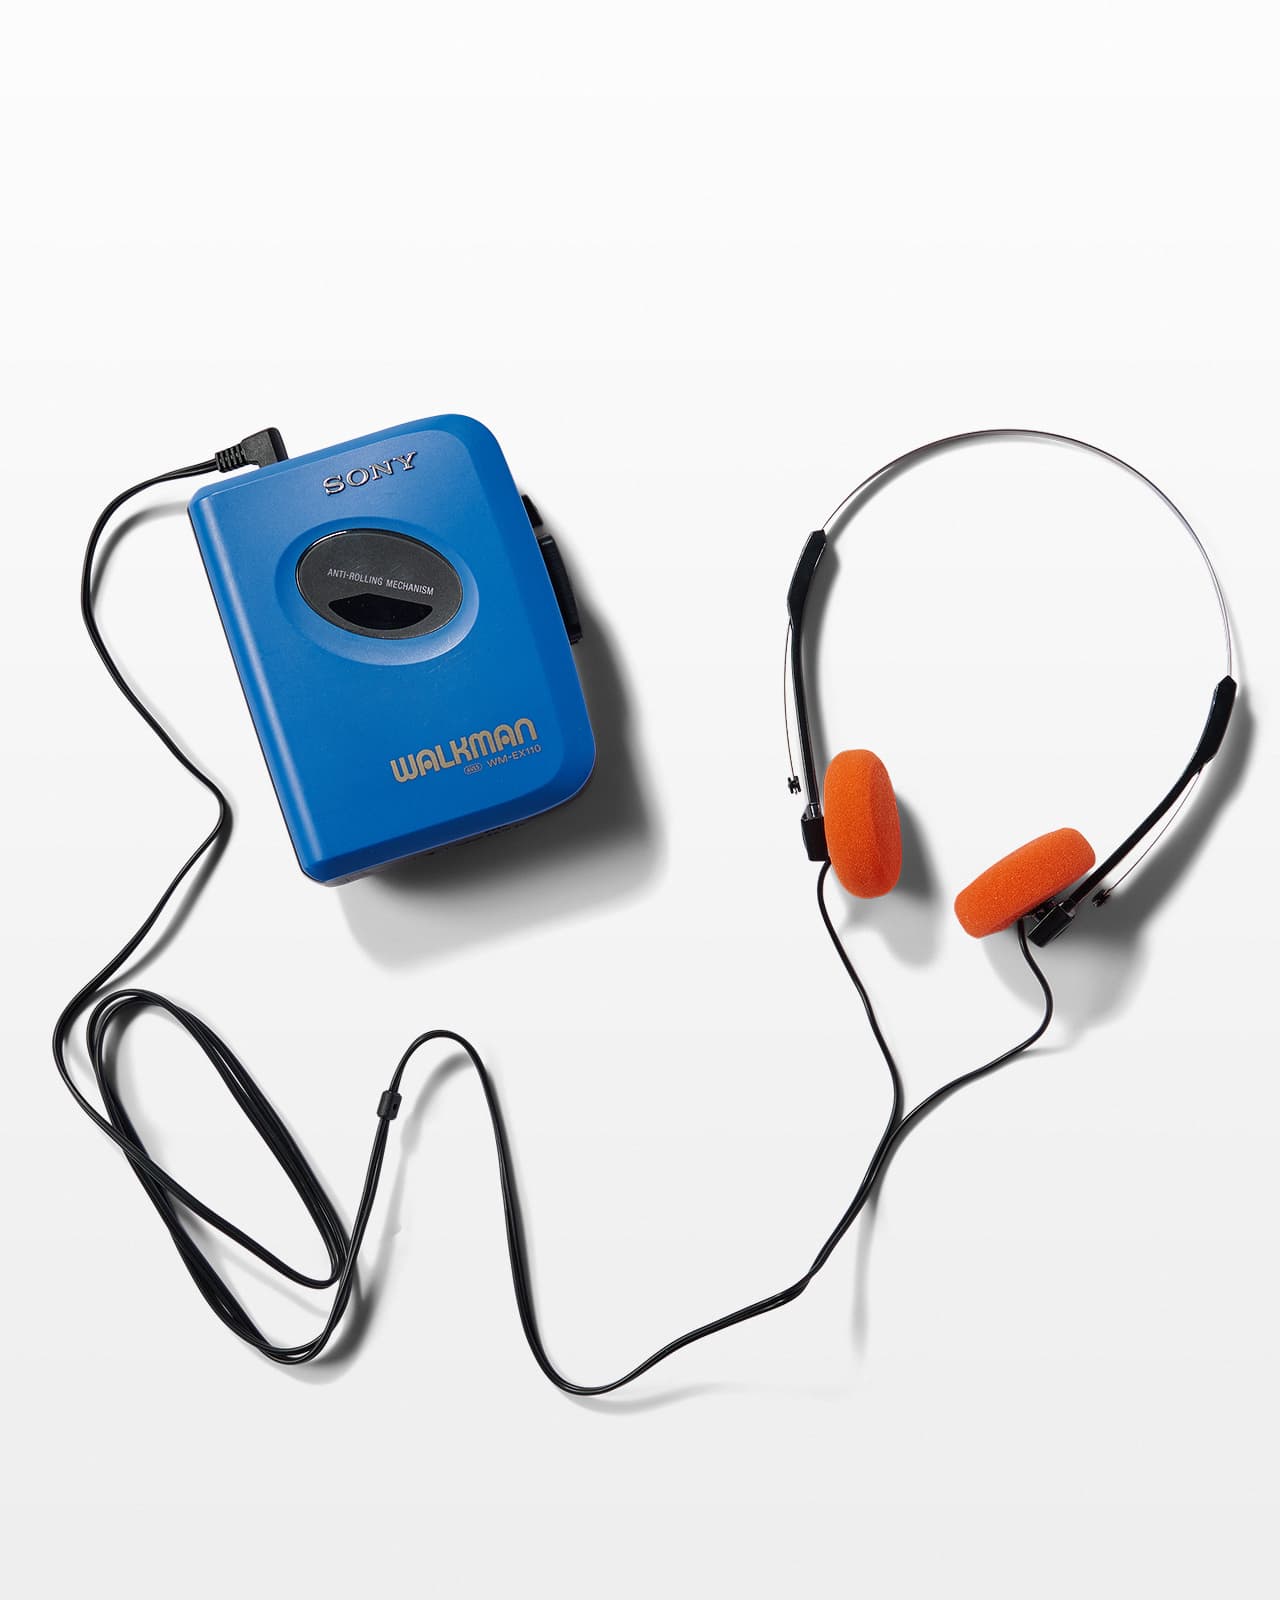 MU237 Turner Walkman Cassette Player with Headphones Prop Rental